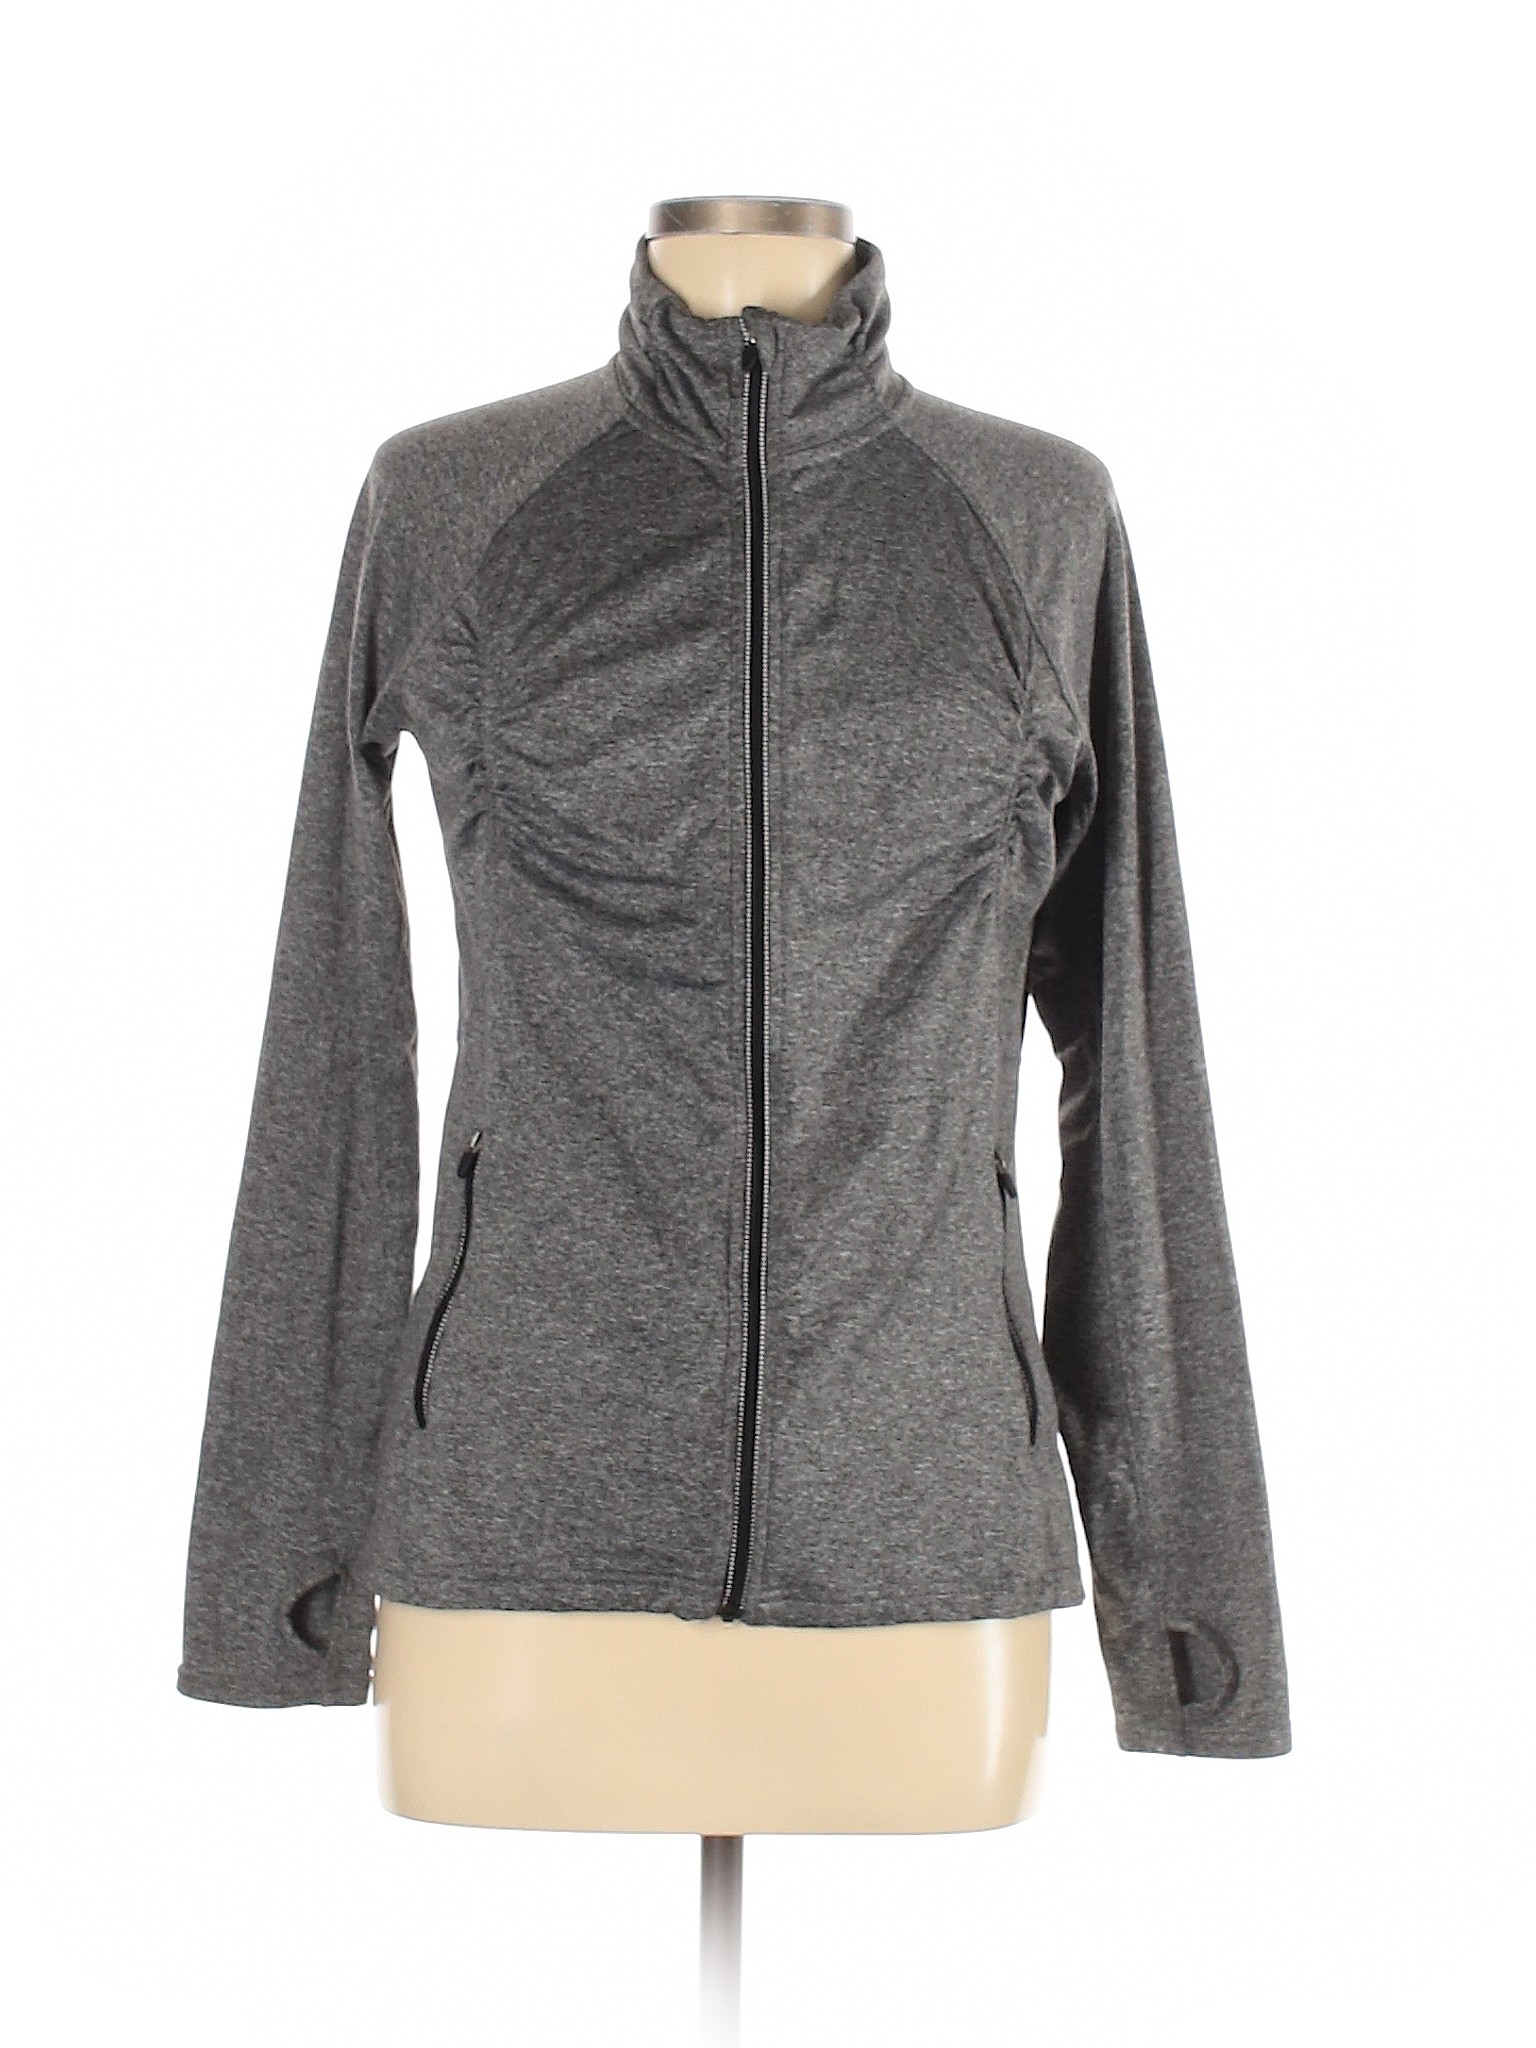 RBX Women Gray Track Jacket M | eBay